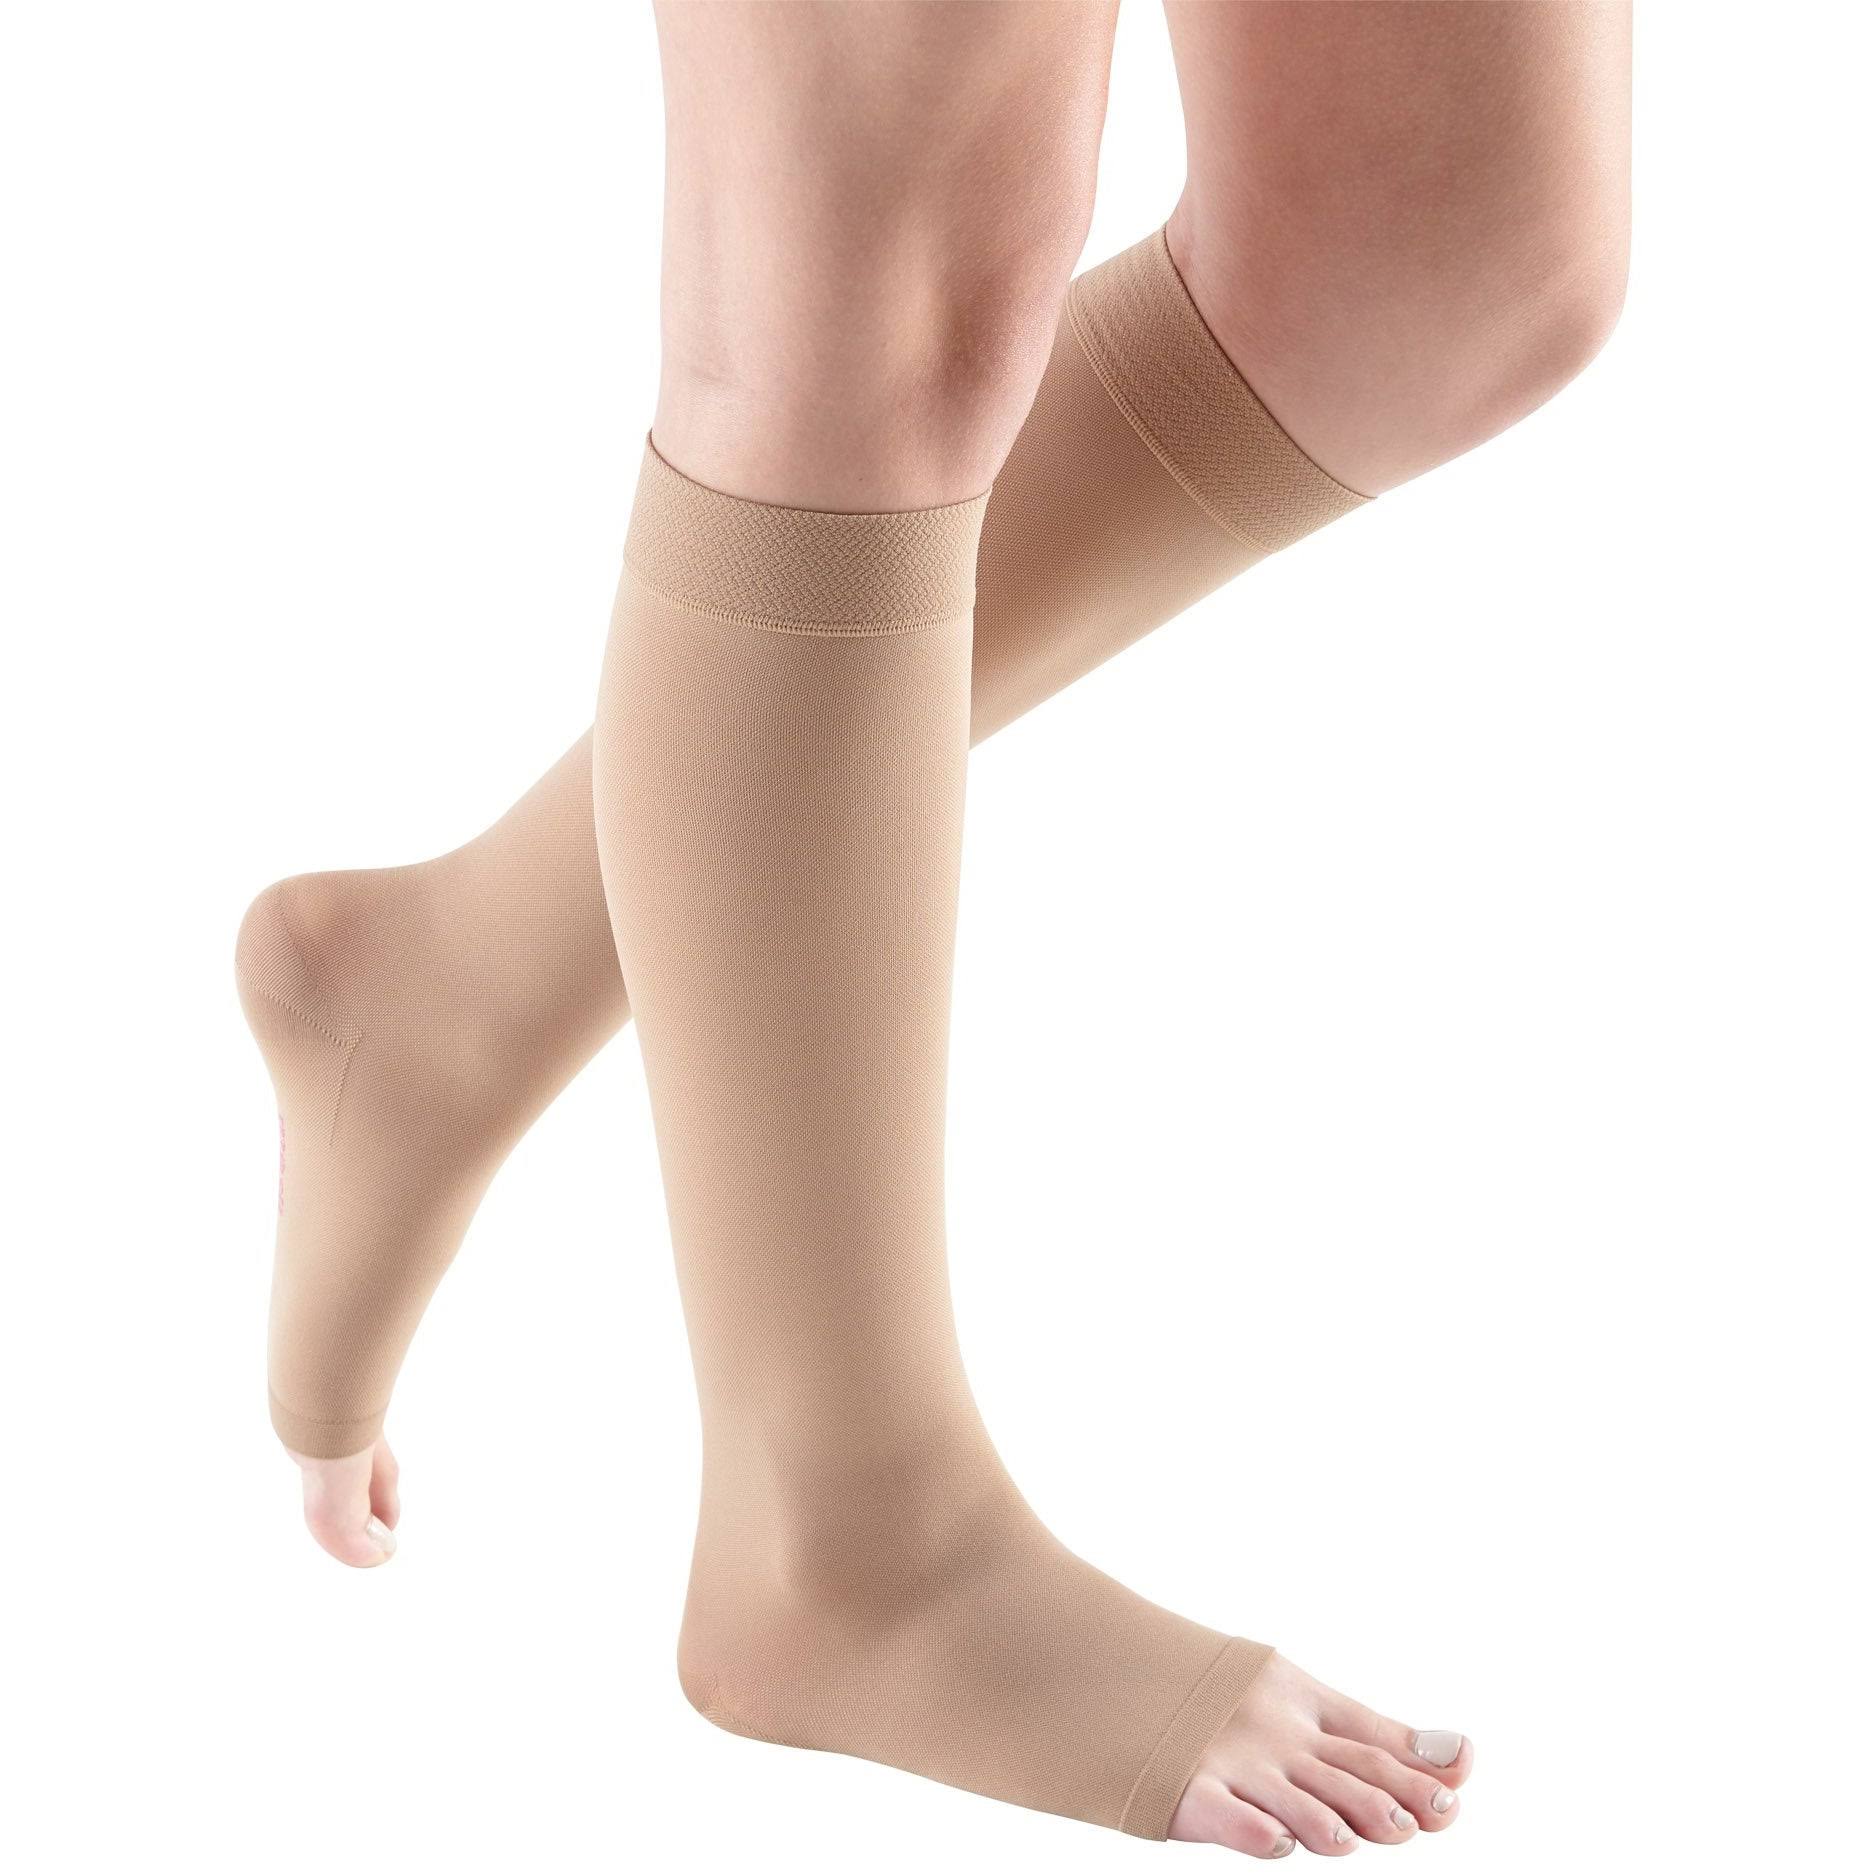 mediven Comfort Calf High Compression Stockings - Closed Toe, 20-30 mmHg